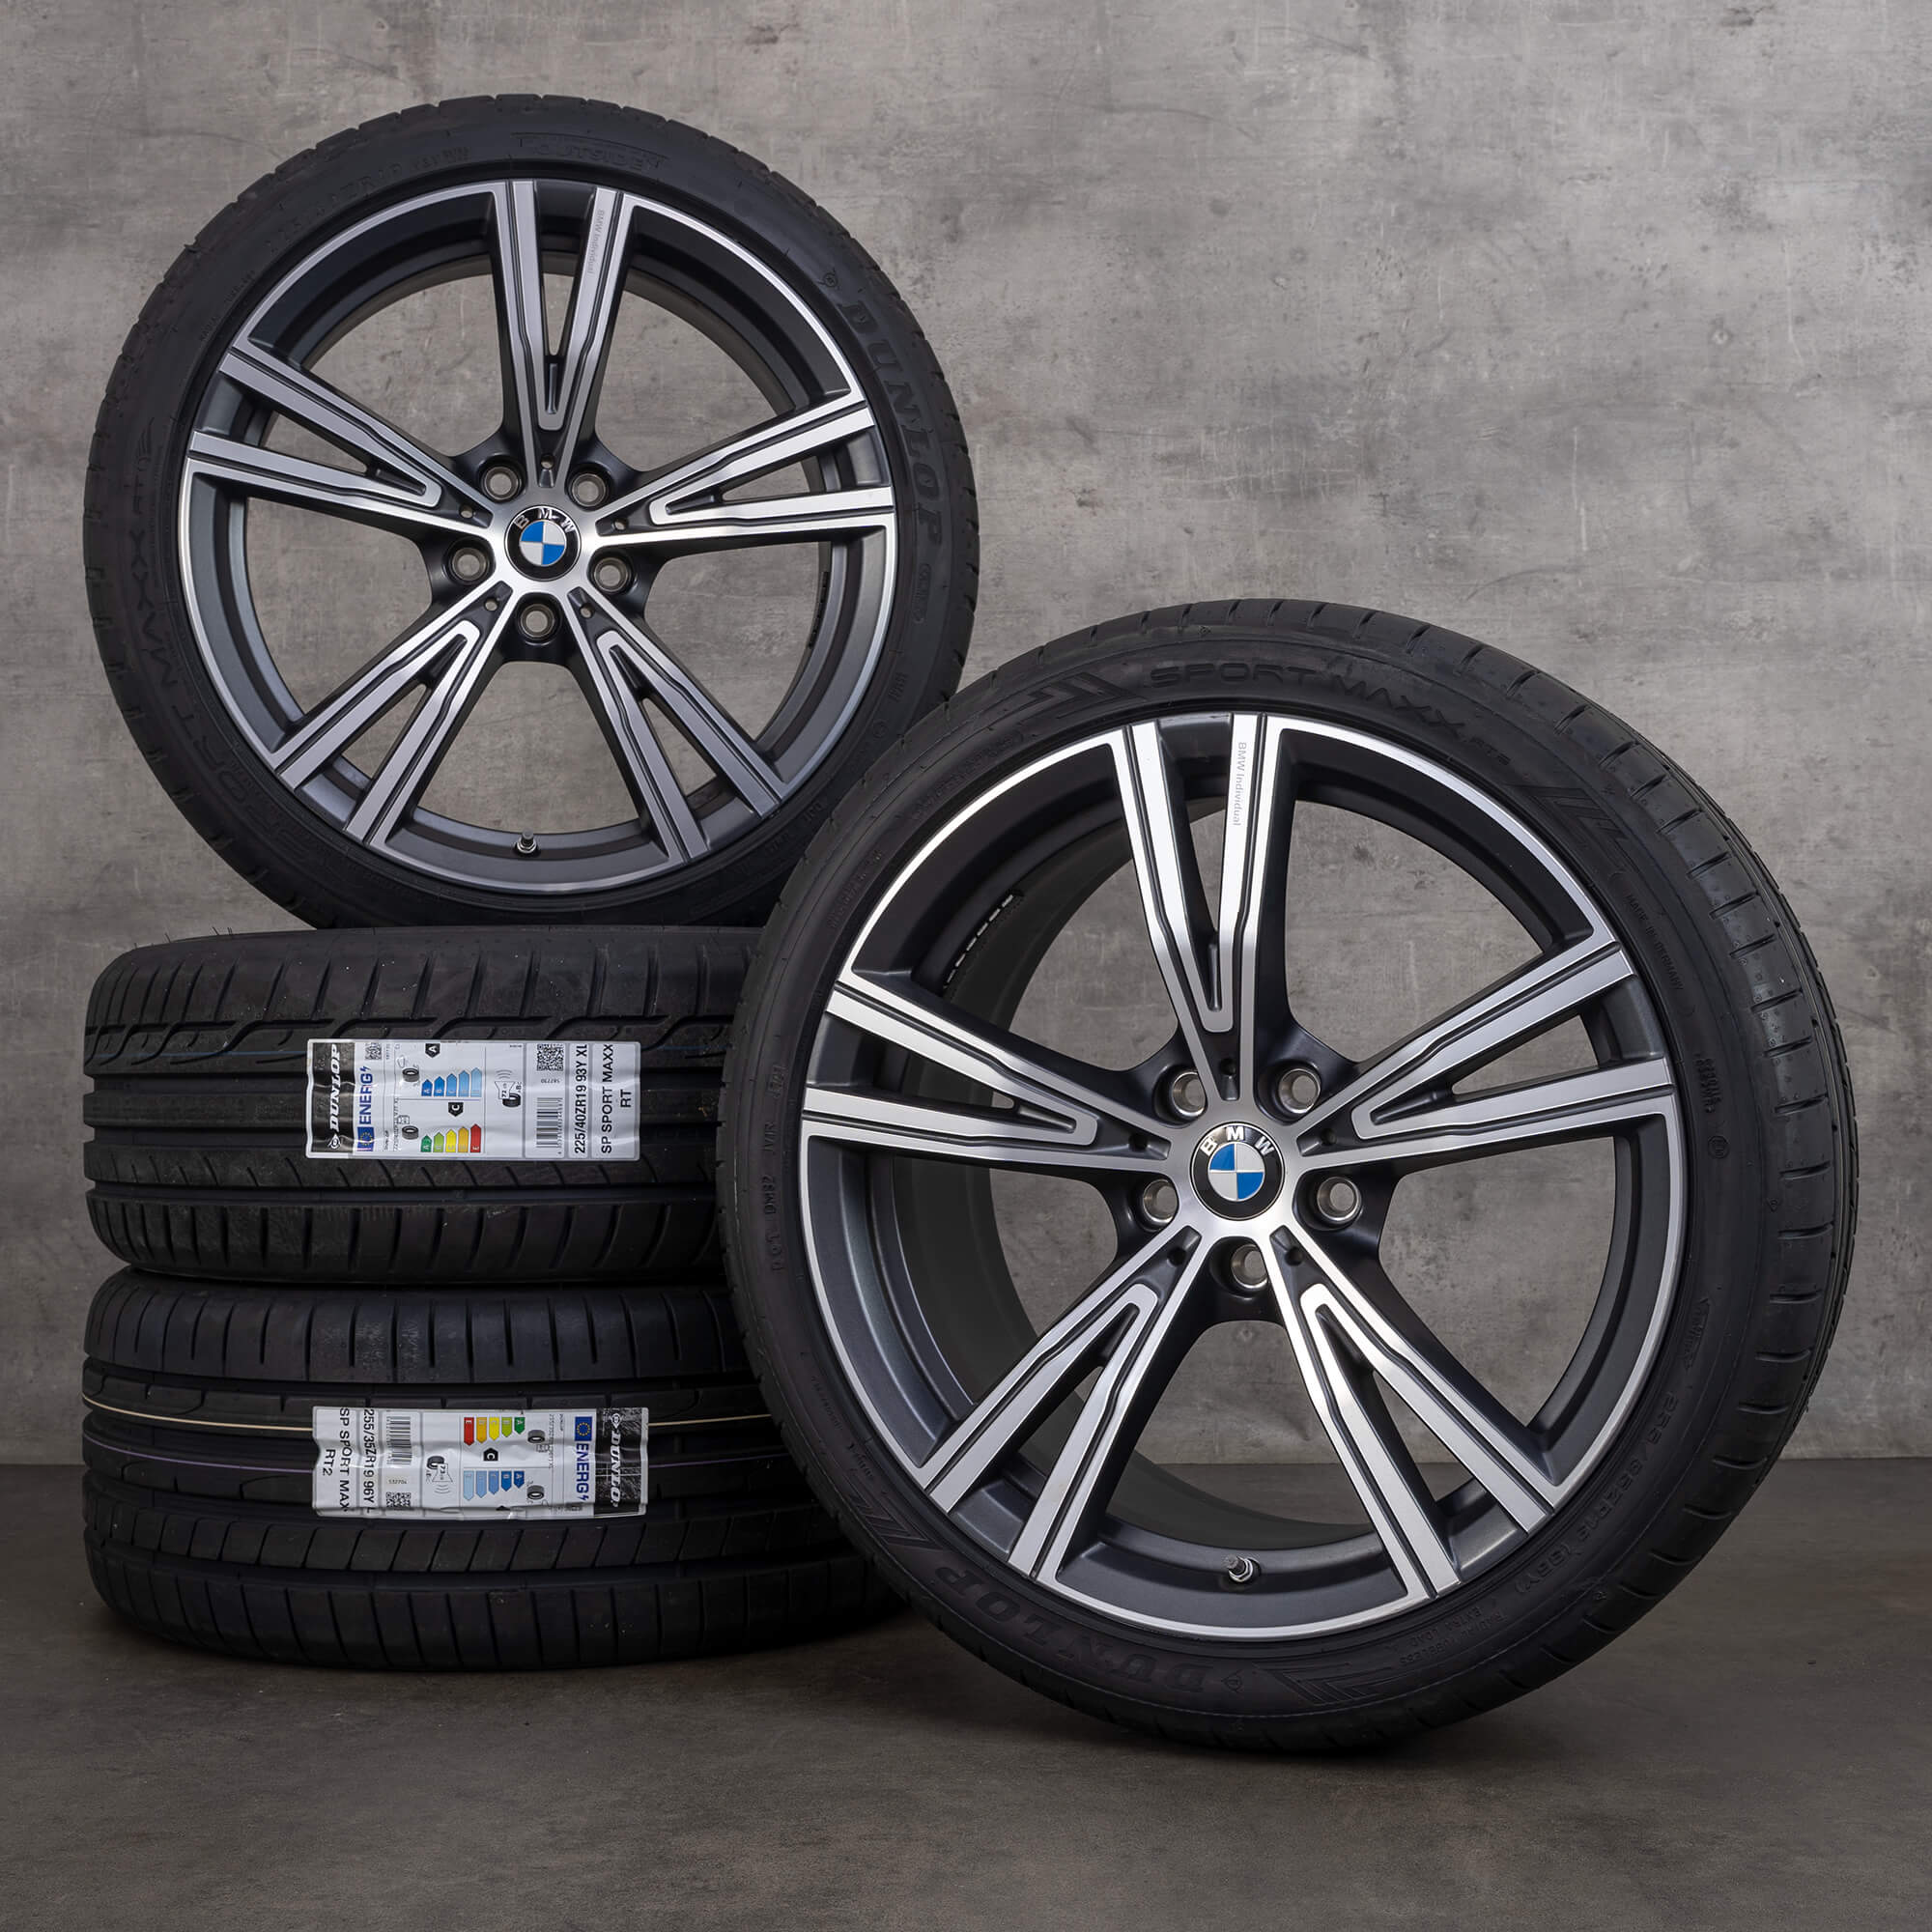 BMW summer wheels 2er G42 3er G20 G21 4er G22 G23 793i 19 inch rims tires